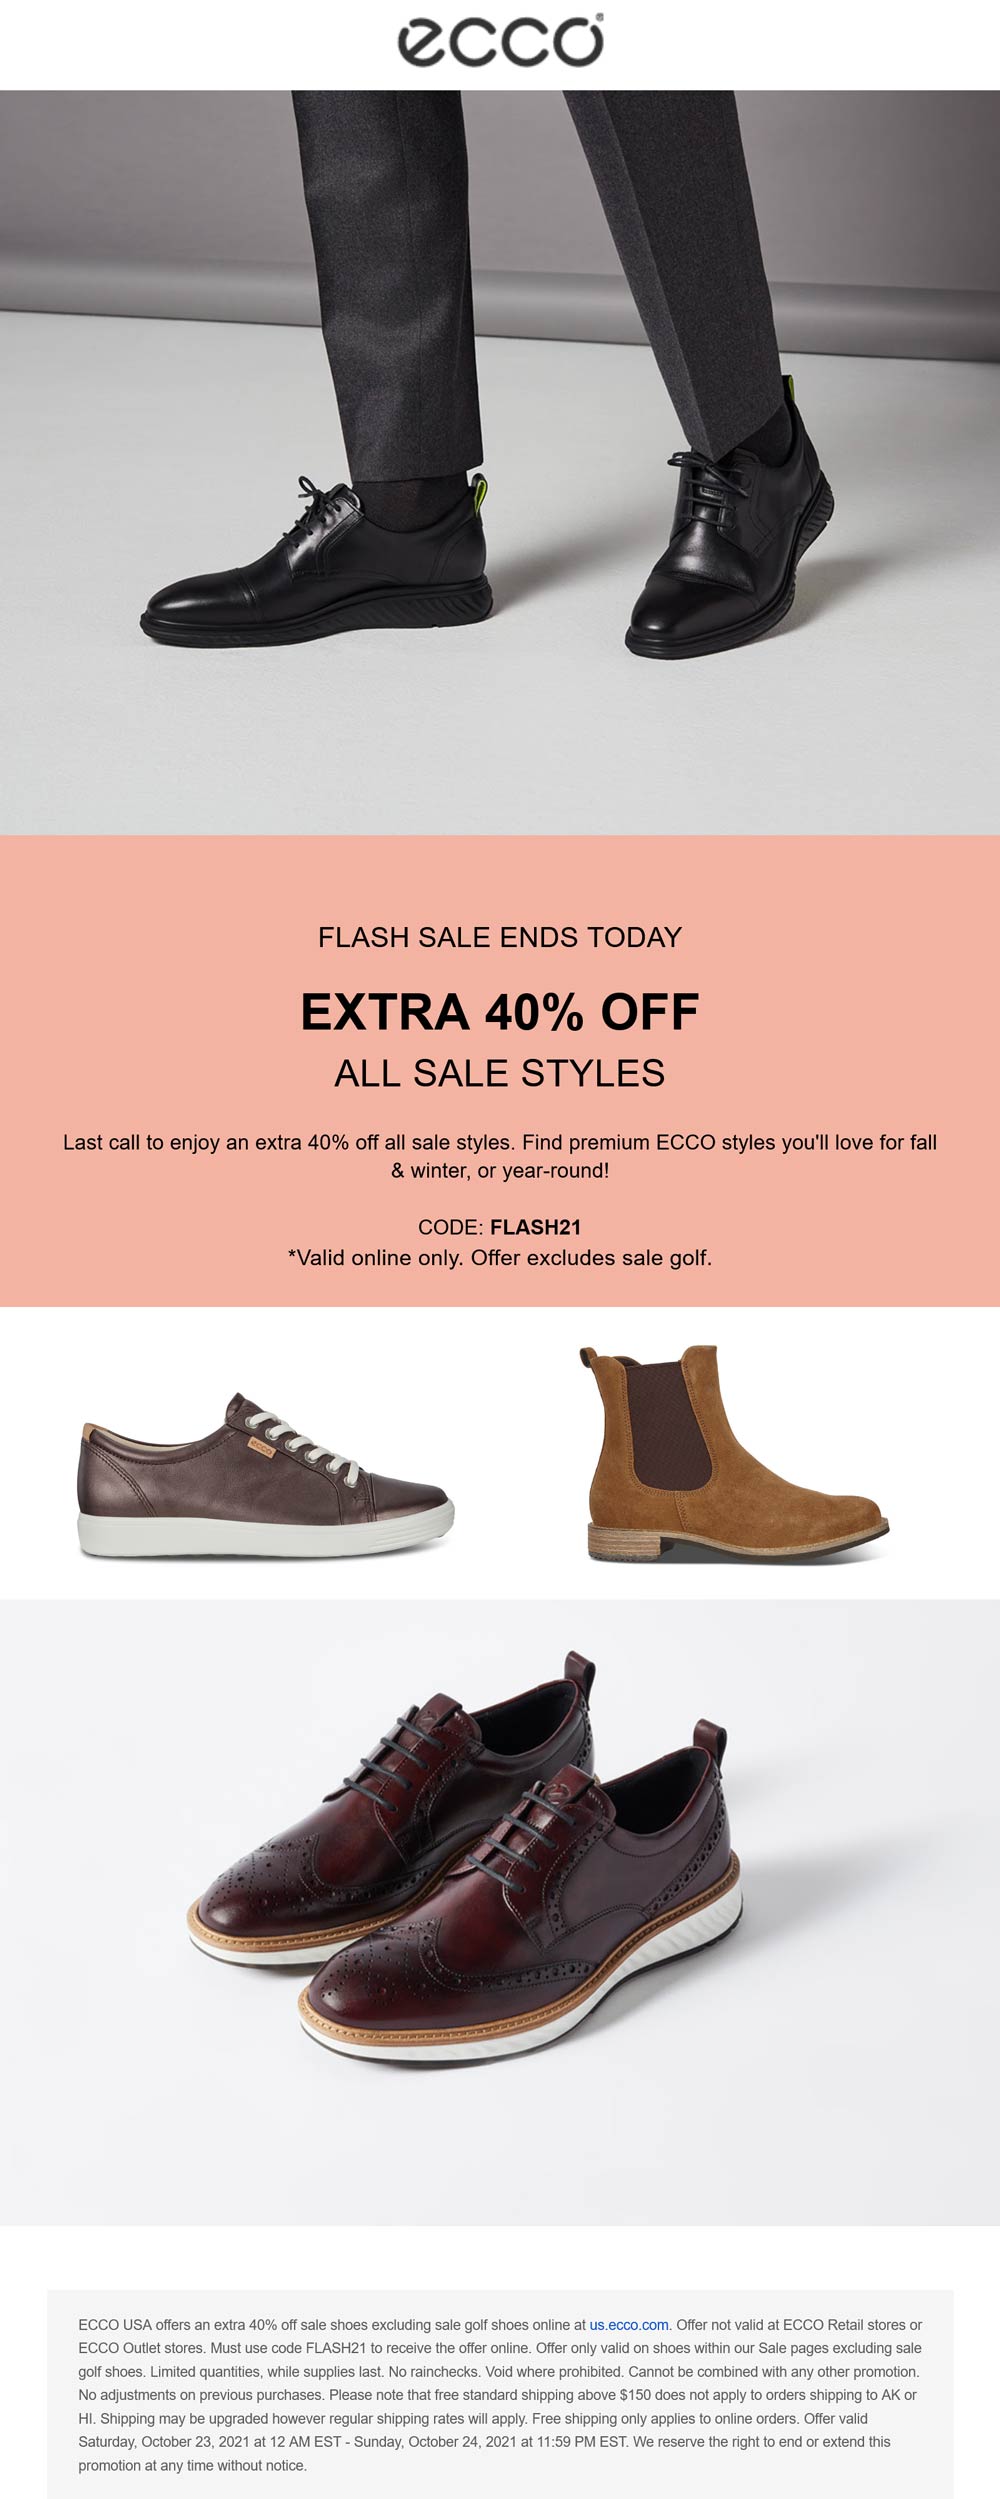 ECCO stores Coupon  Extra 40% off sale shoes online today at ECCO via promo code FLASH21 #ecco 